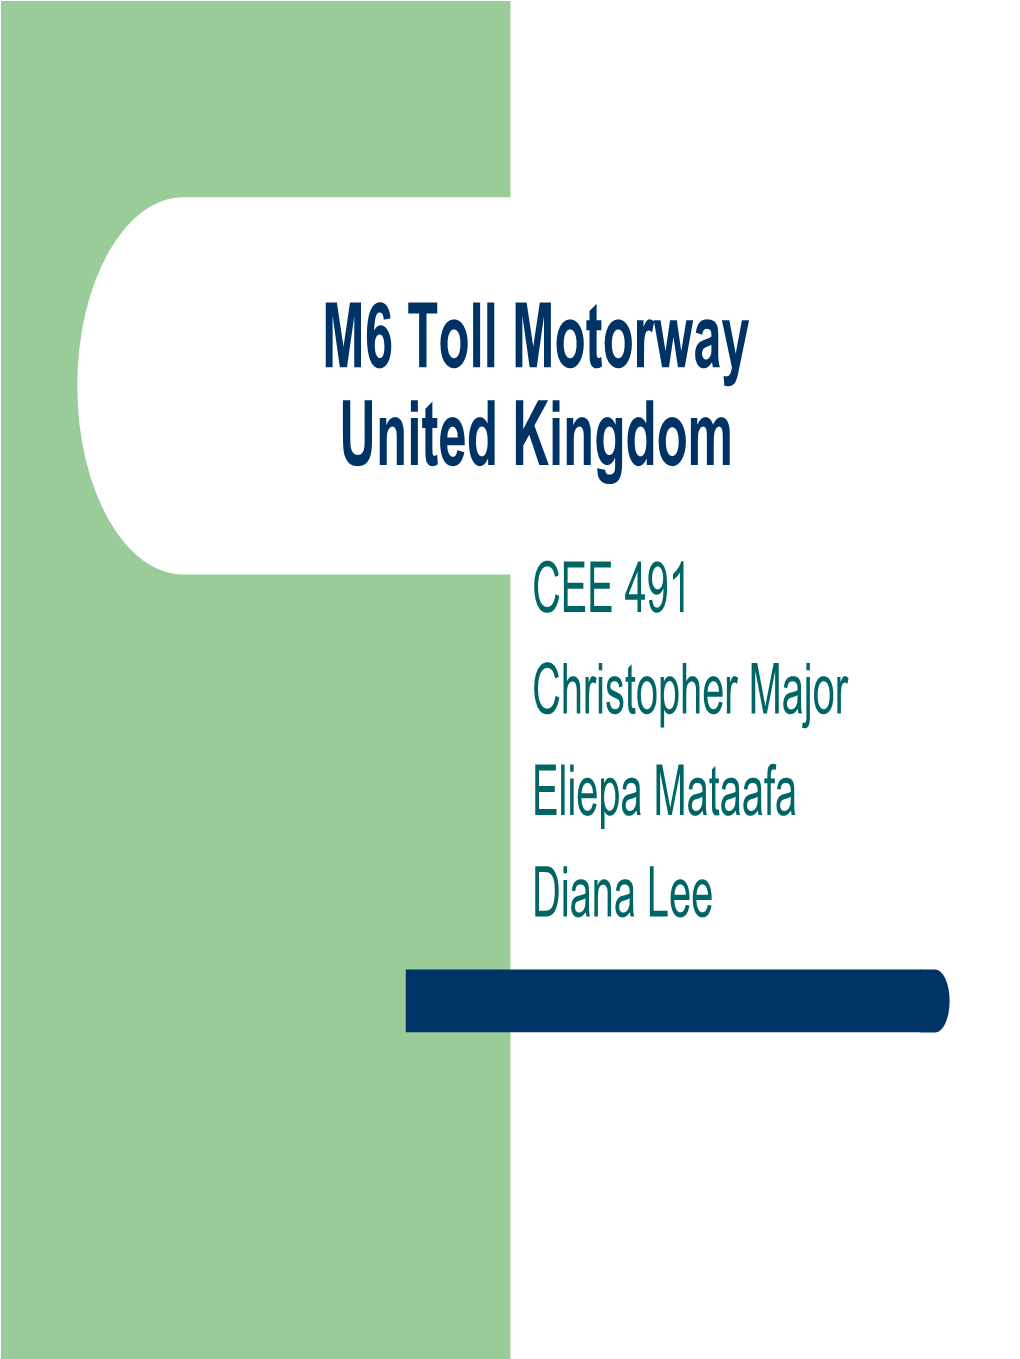 M6 Toll Motorway United Kingdom